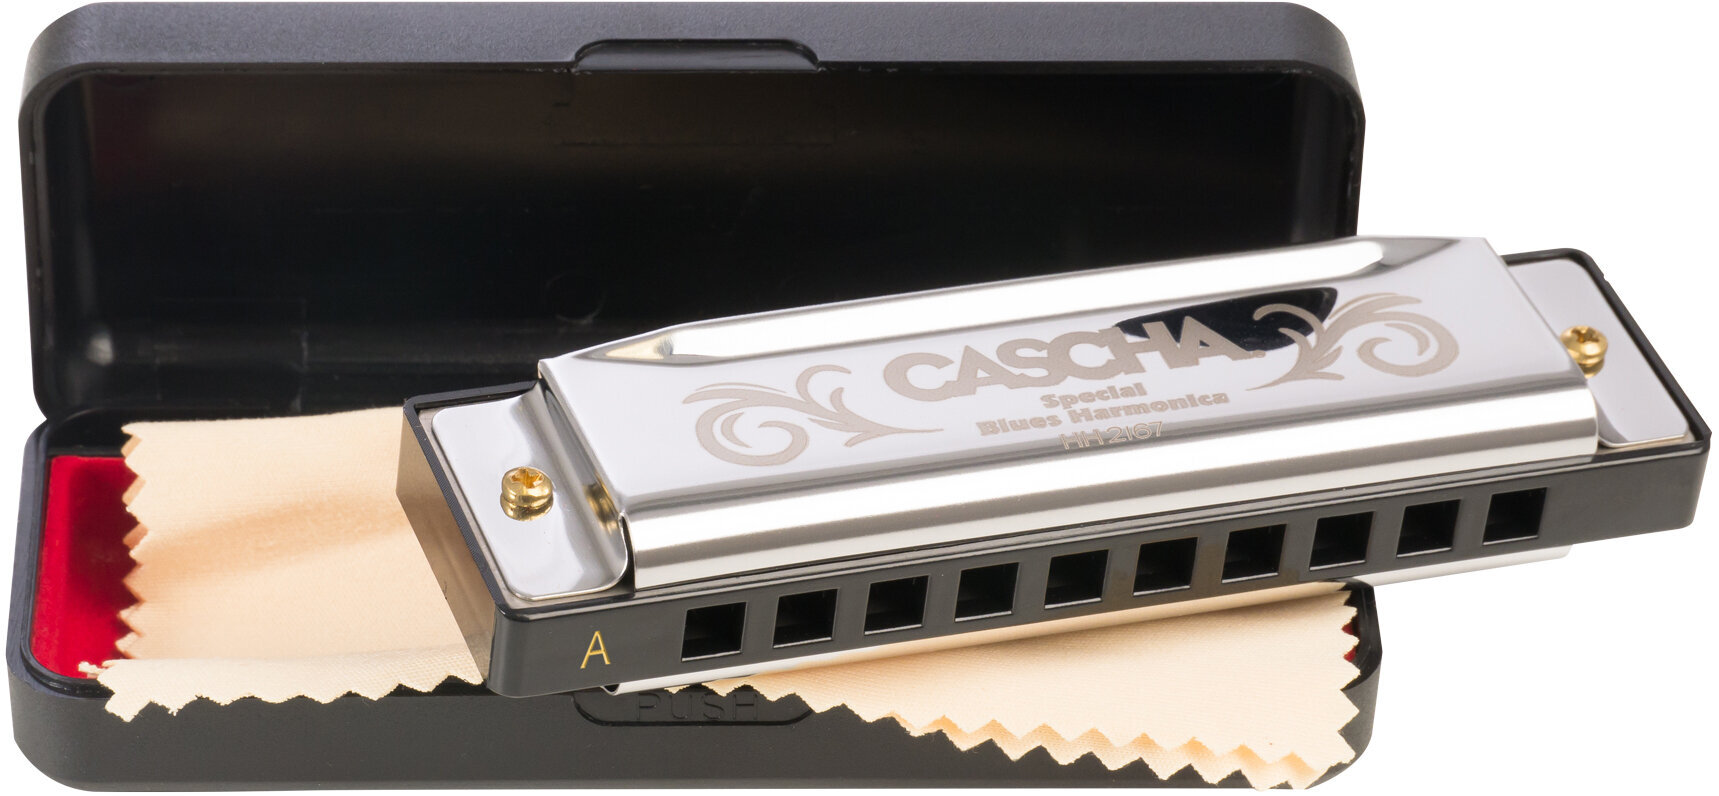 Diatonic harmonica Cascha HH 2167 Special Blues A